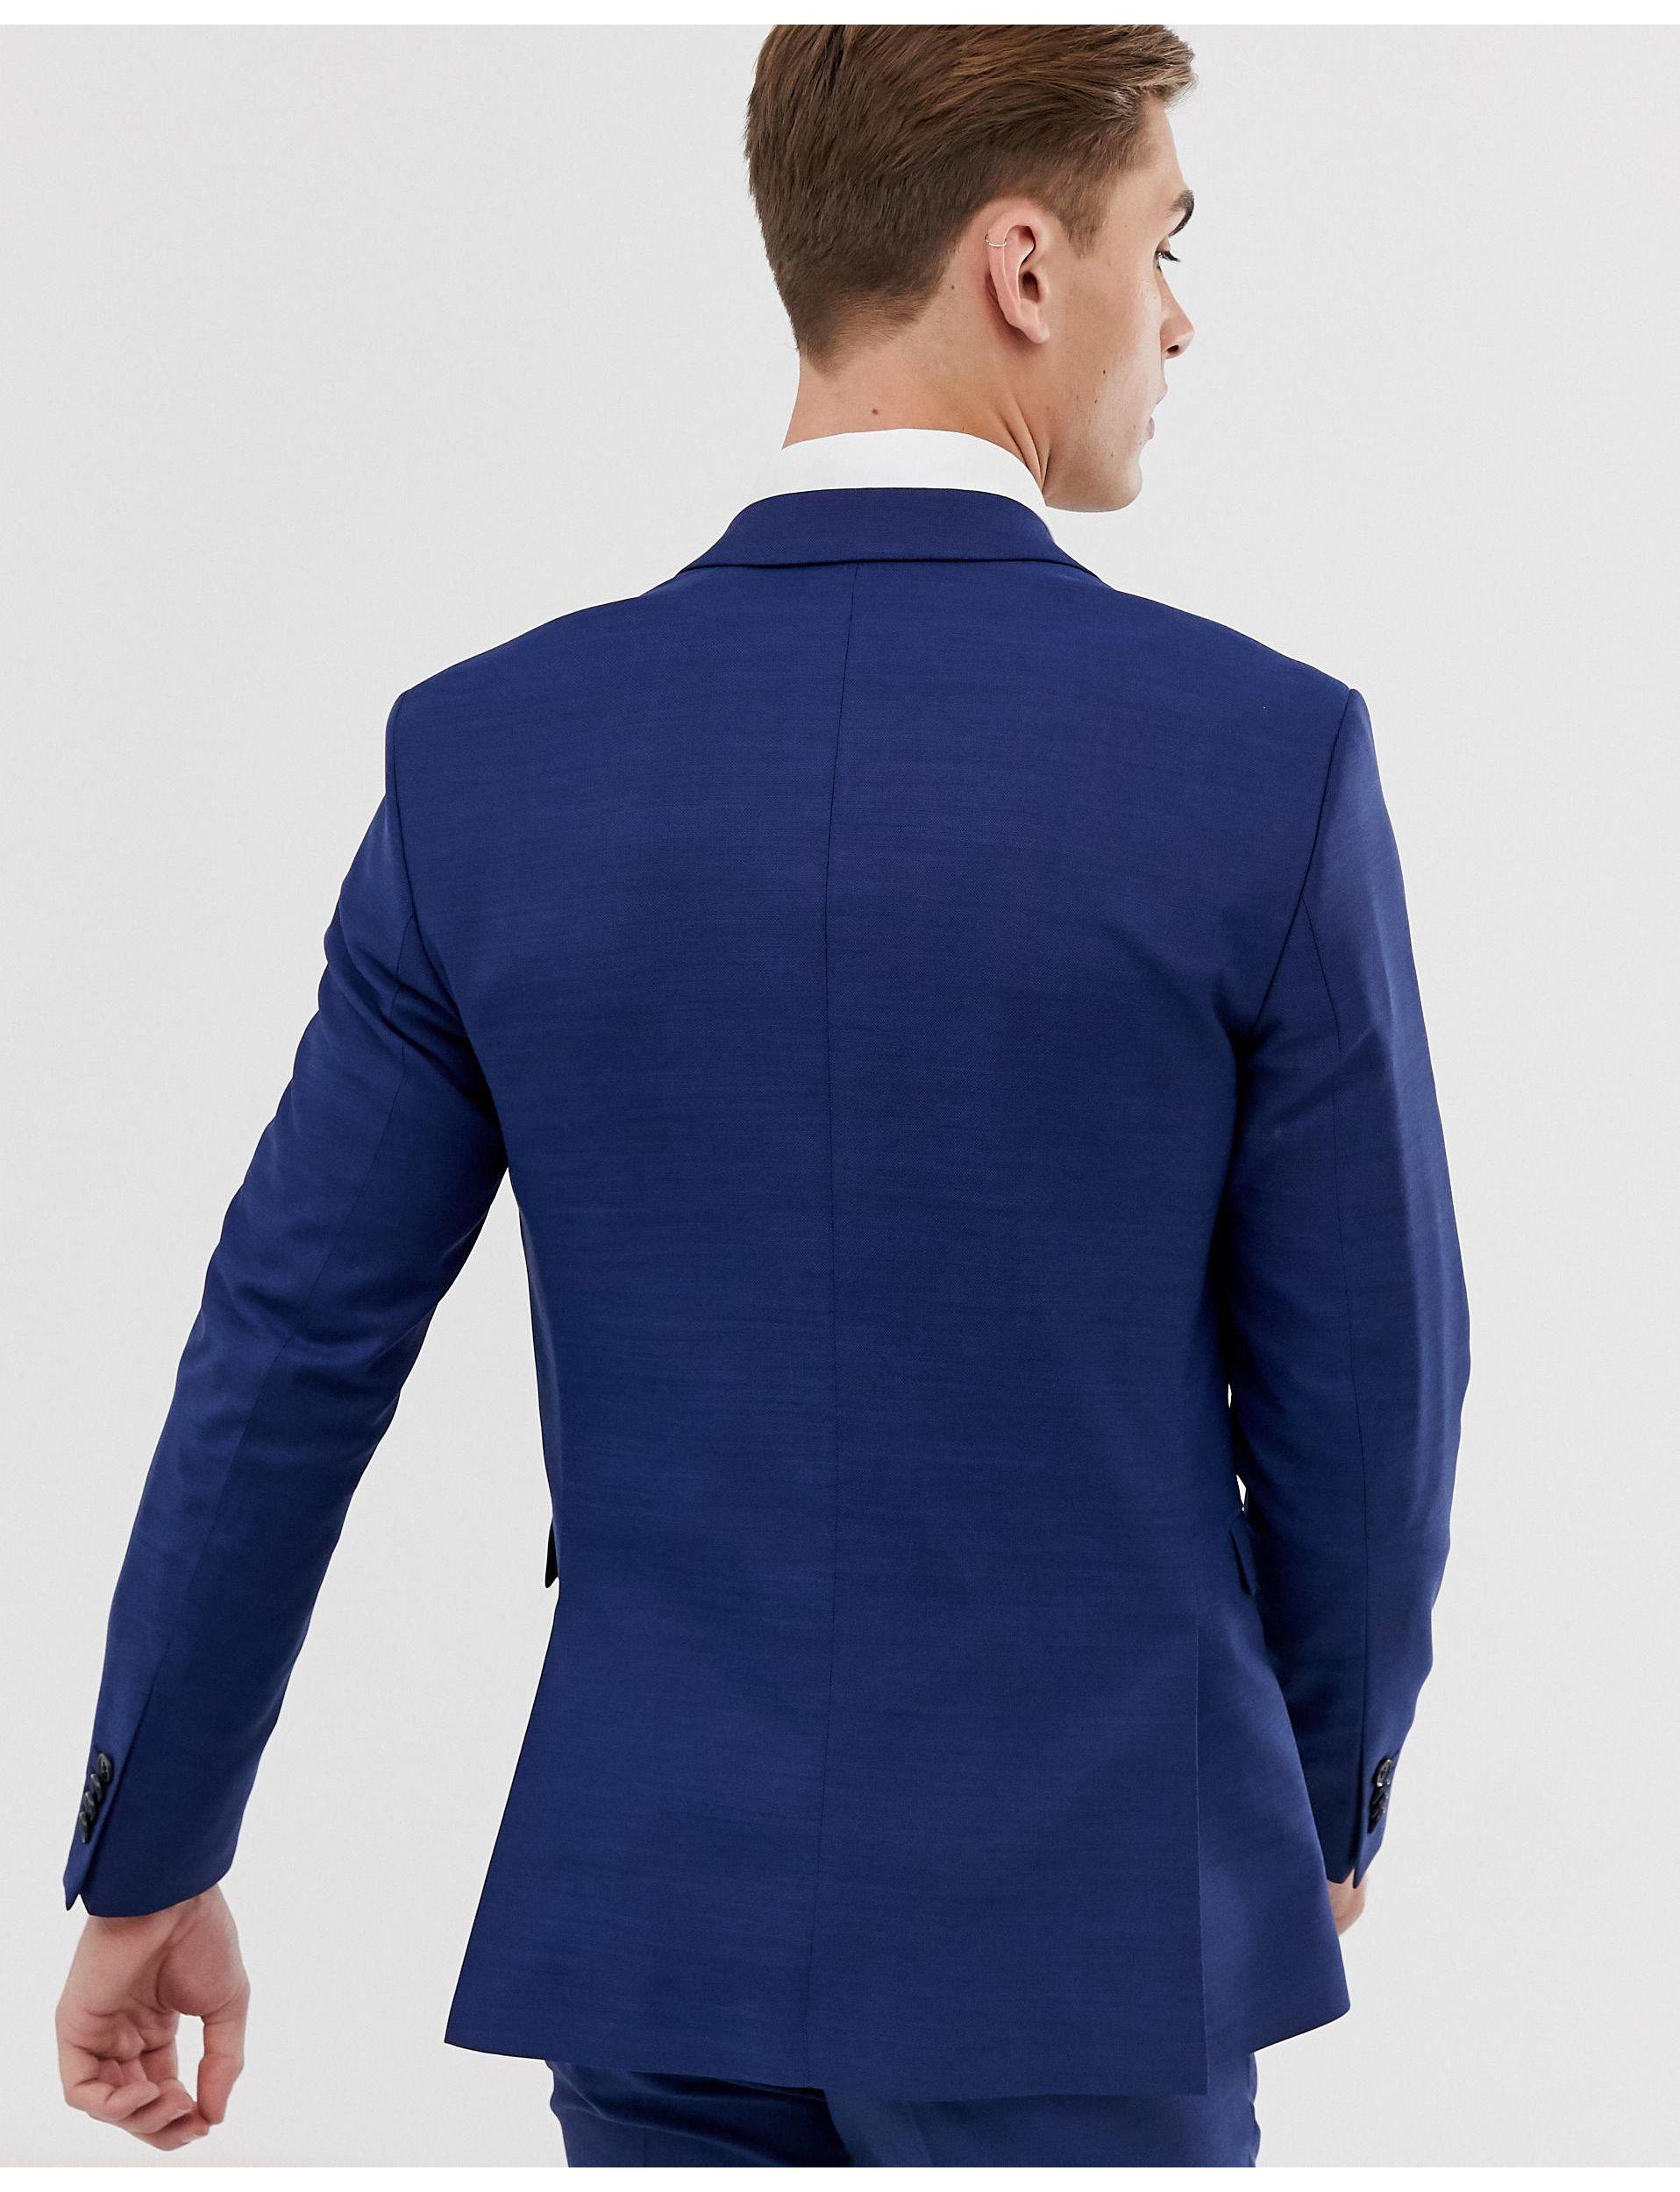 Jack & Jones Denim Premium Slim Fit Stretch Suit Jacket in Blue for Men |  Lyst